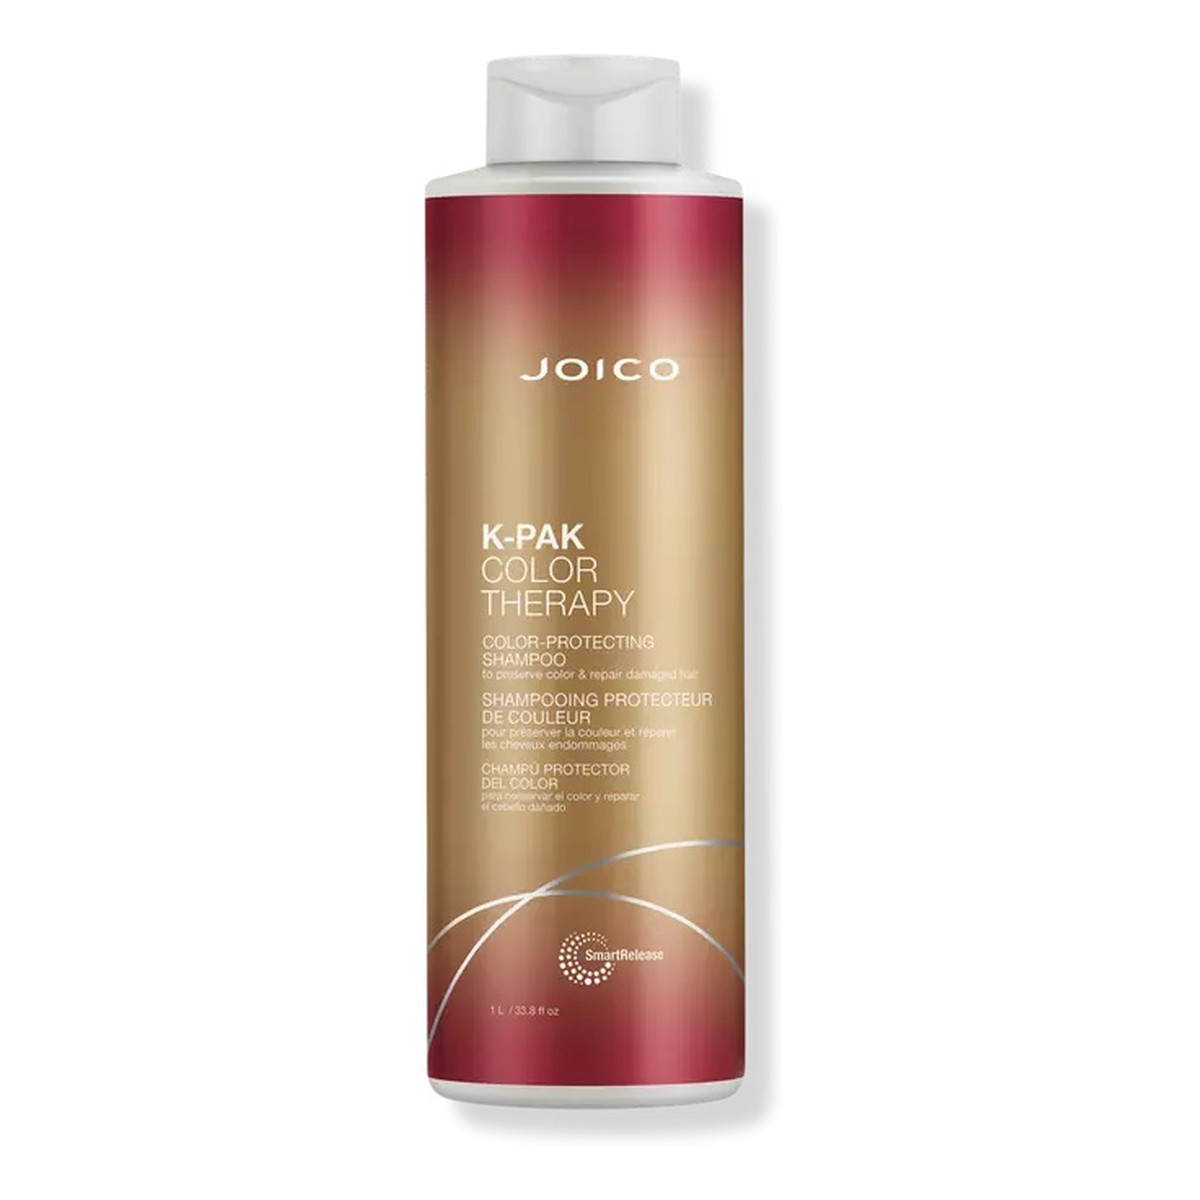 Joico K-pak color therapy color protecting shampoo szampon chroniący kolor włosów 1000ml